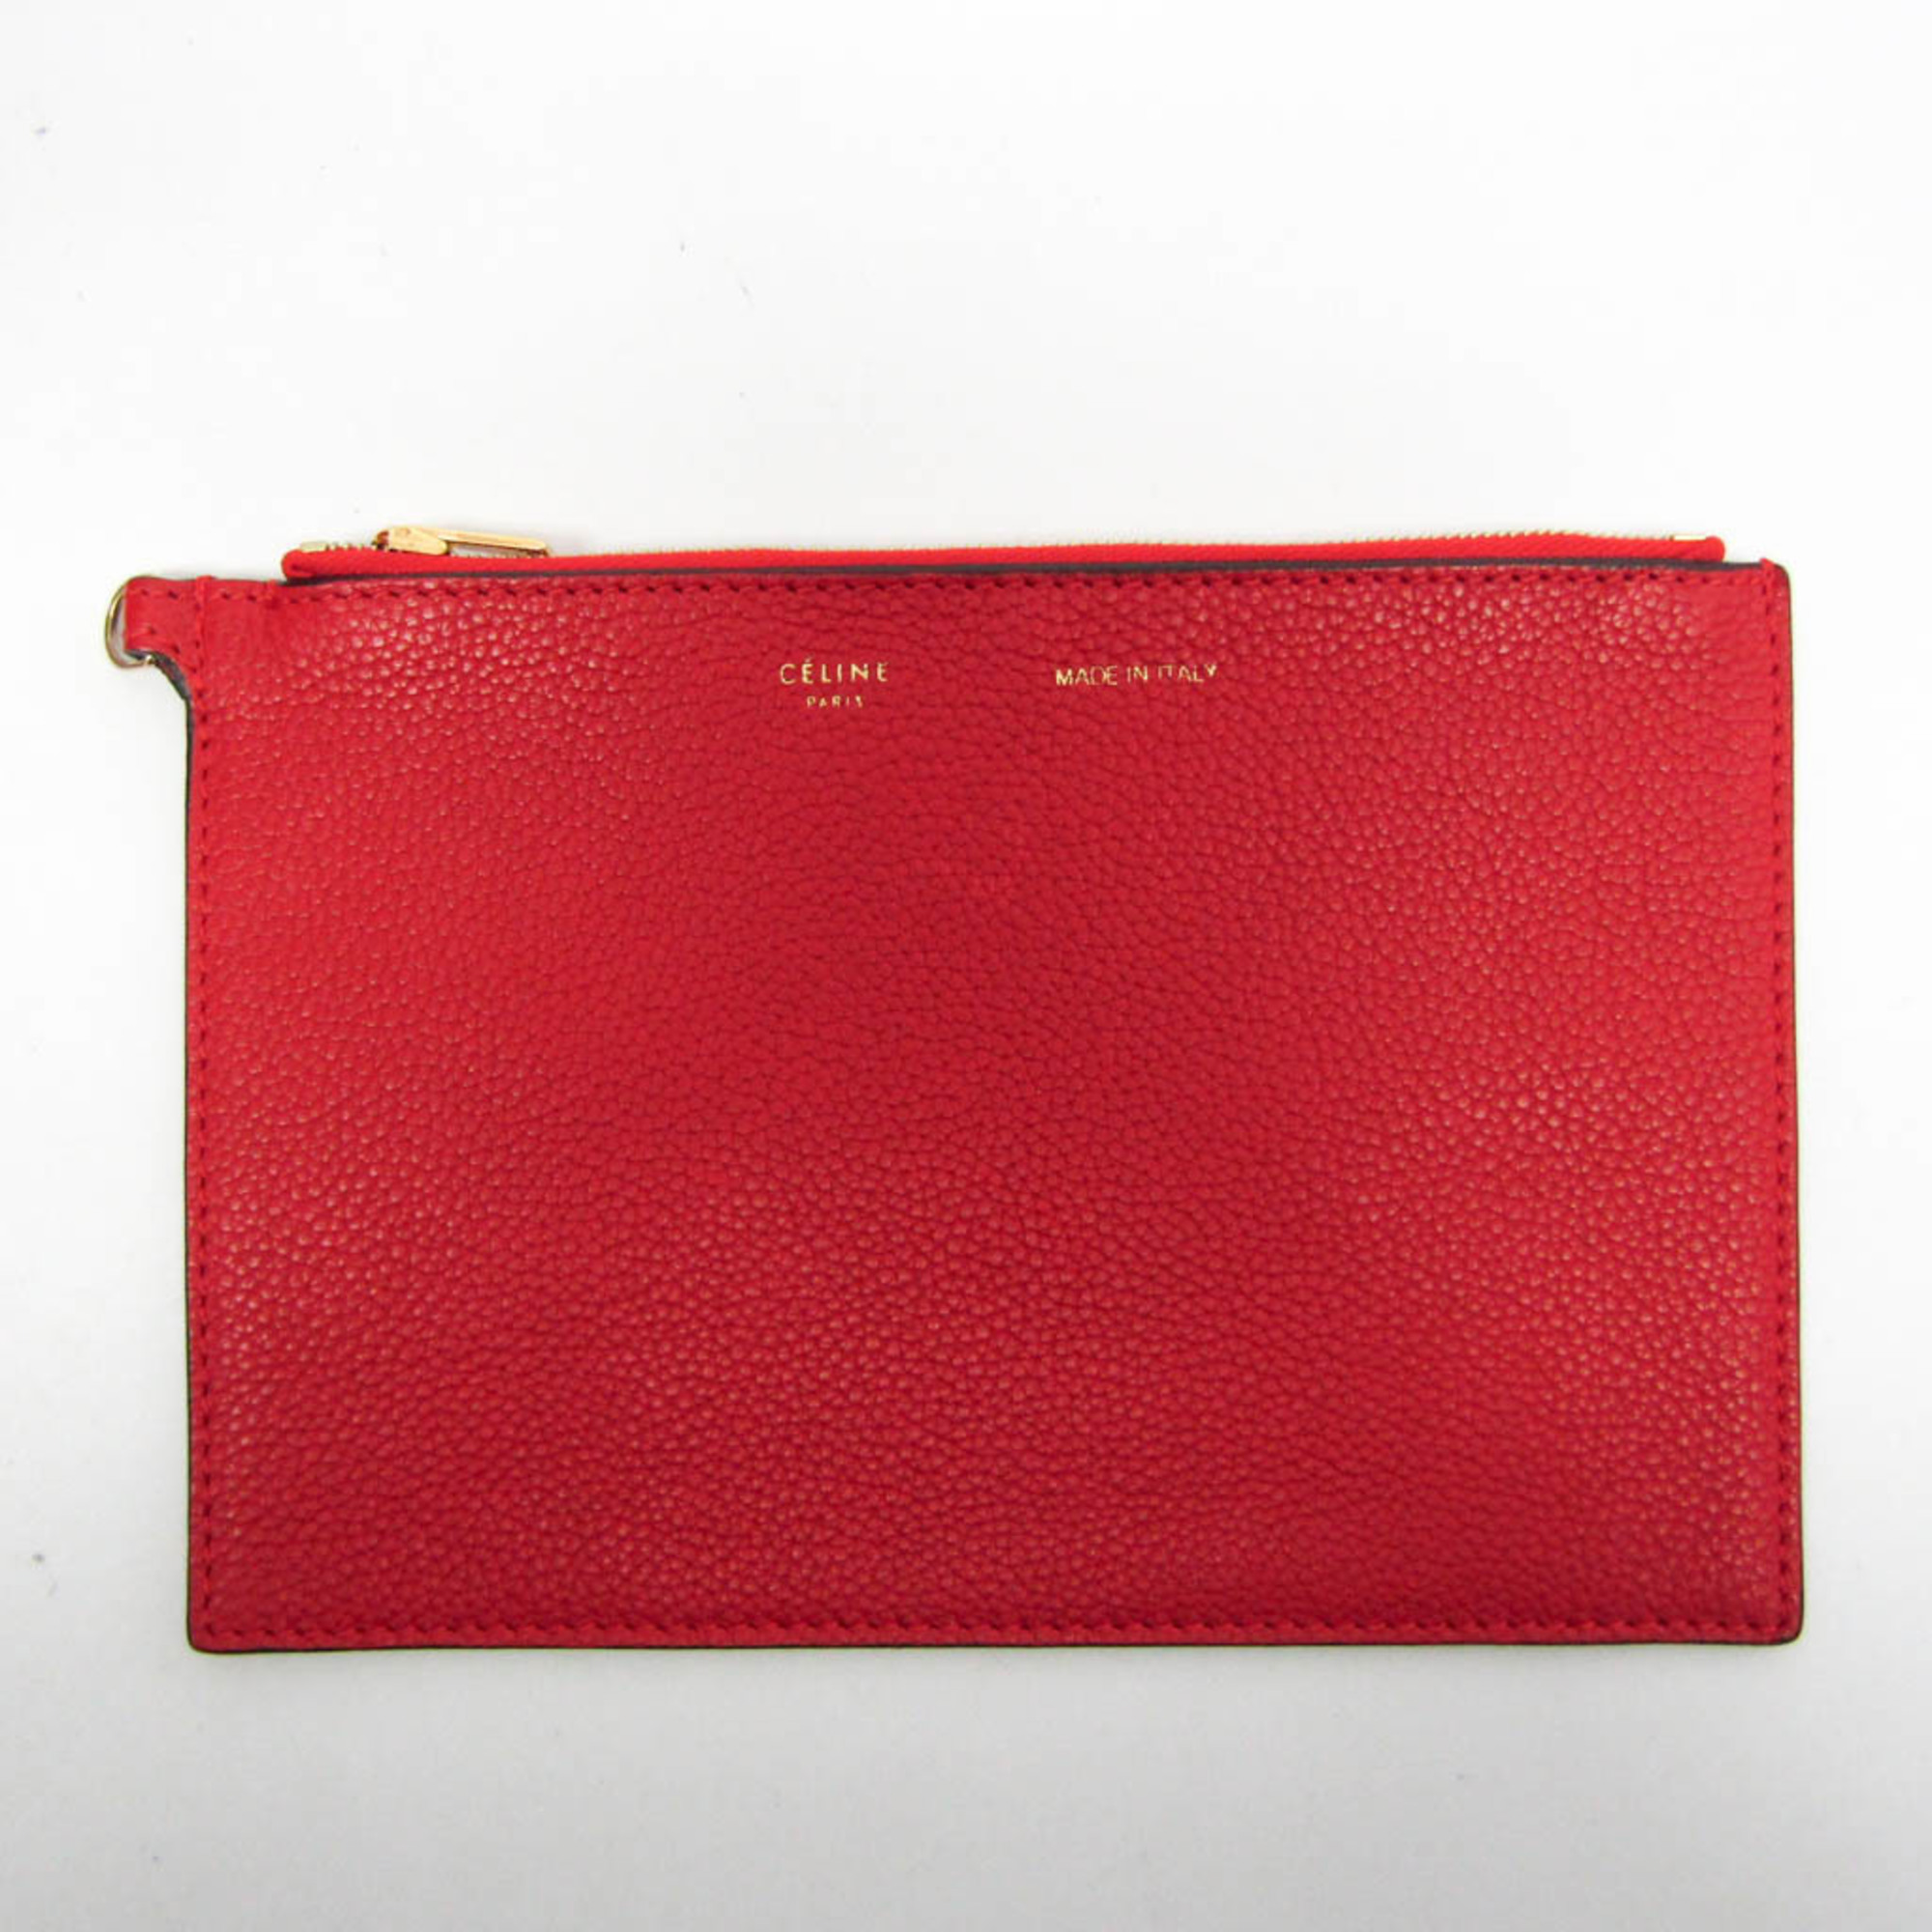 Celine Cabas Phantom Medium 171053 Women's Leather Tote Bag Red Color